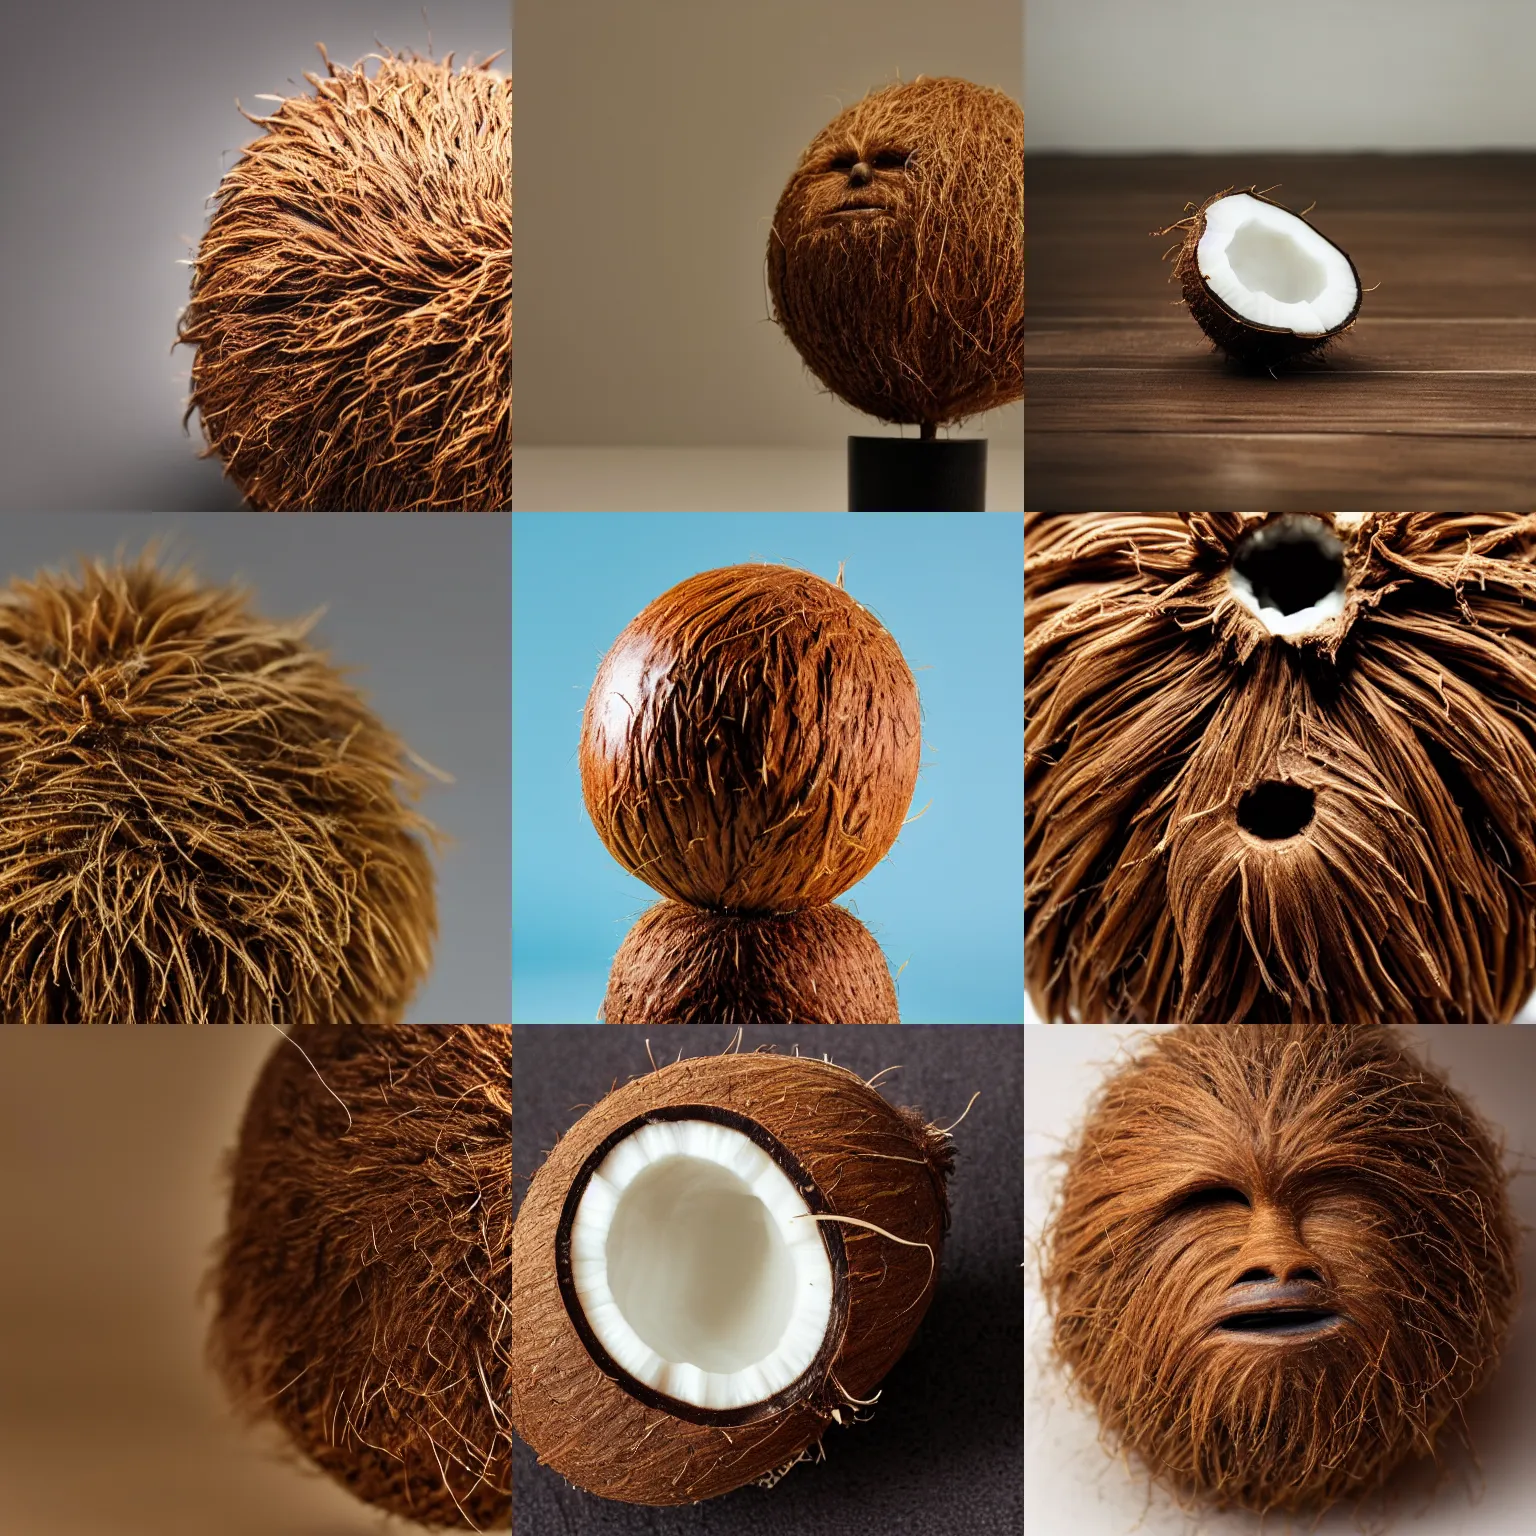 Prompt: a coconut that looks like chewbacca, macro lens, high quality, studio lighting